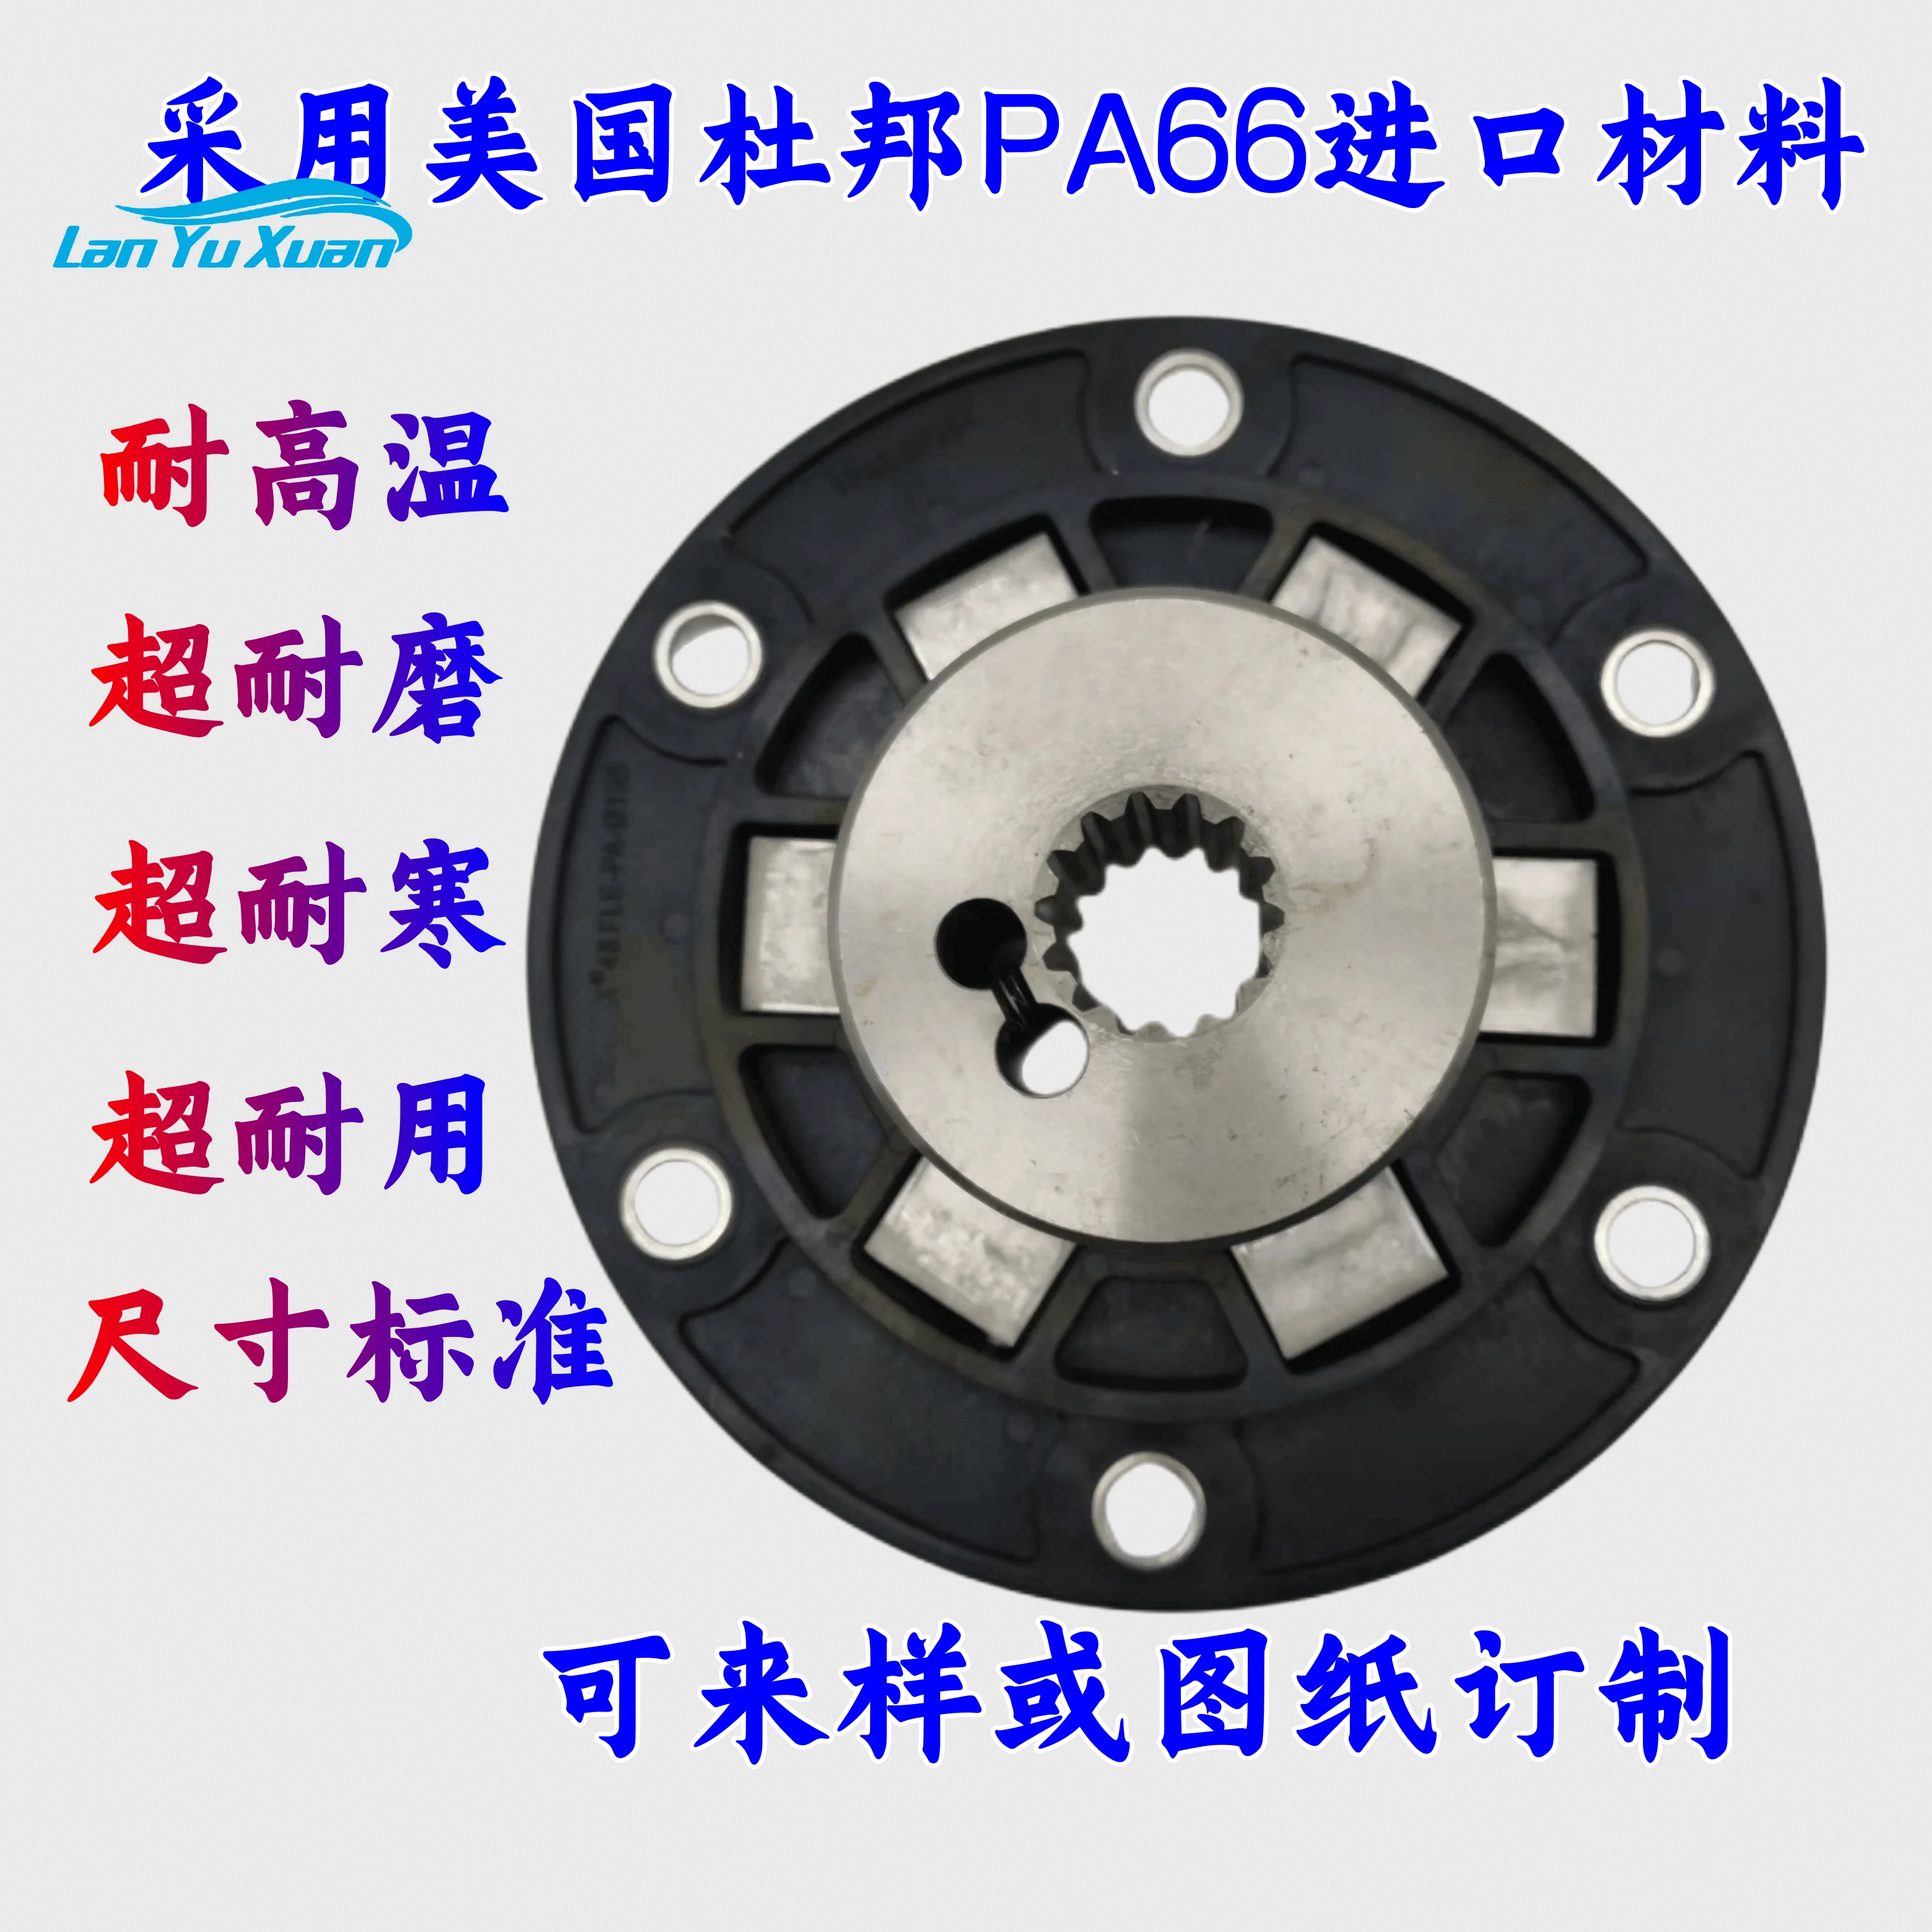 

CENTAFLEX-K-125-195 Xugong 150 coupling flywheel coupling connecting plate connecting flange